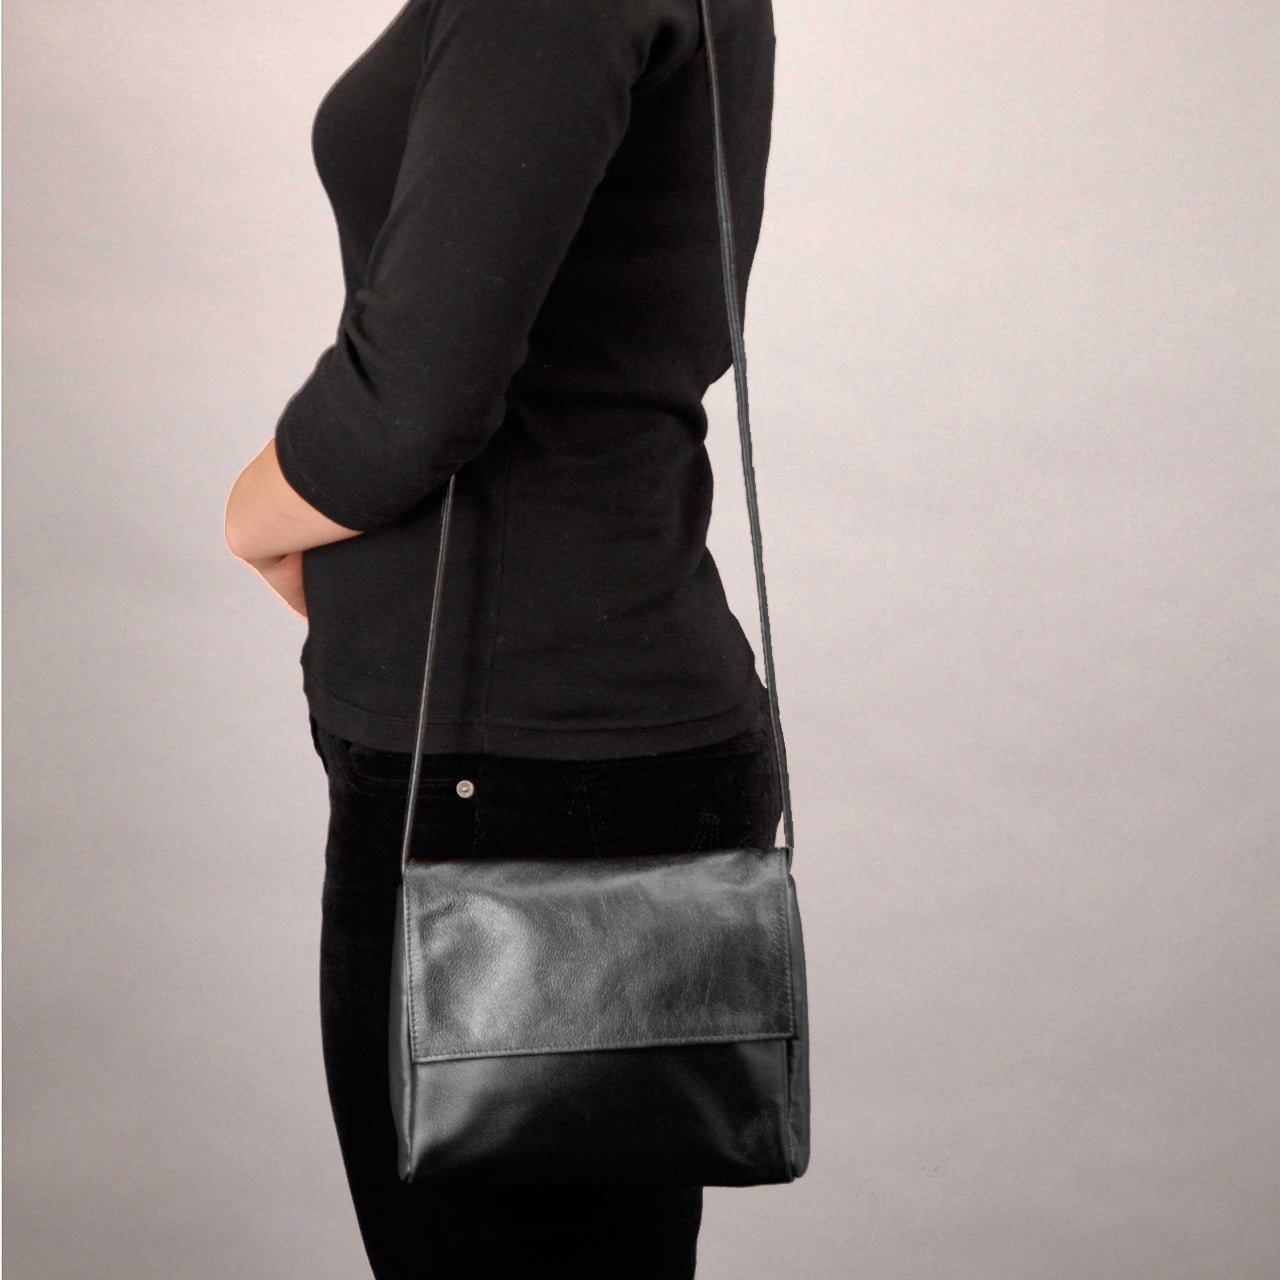 SVEN Style No. 115 Crossbody/Shoulder Bag metallic dark pewter leather